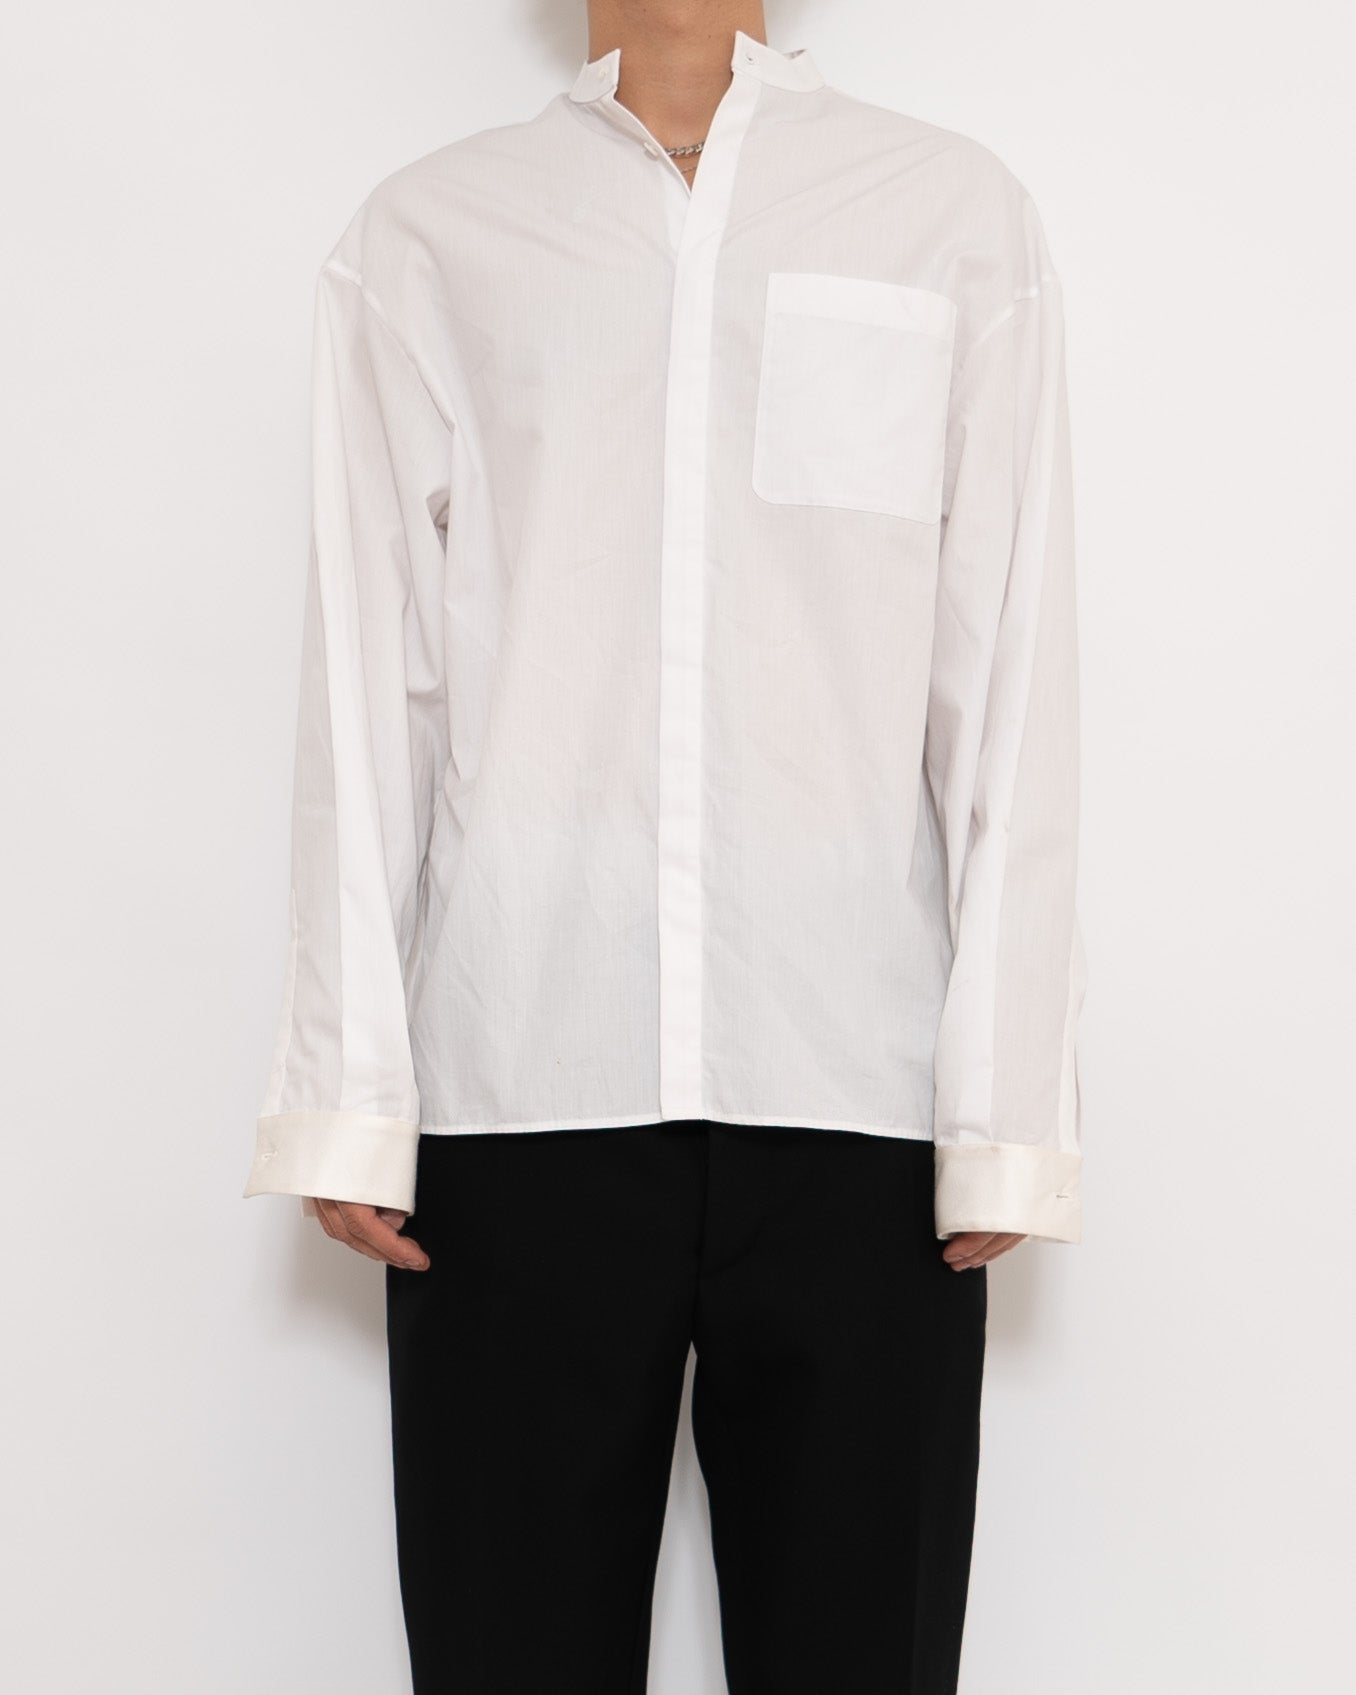 FW19 Byron White Mao Collar Shirt Sample – Backyardarchive